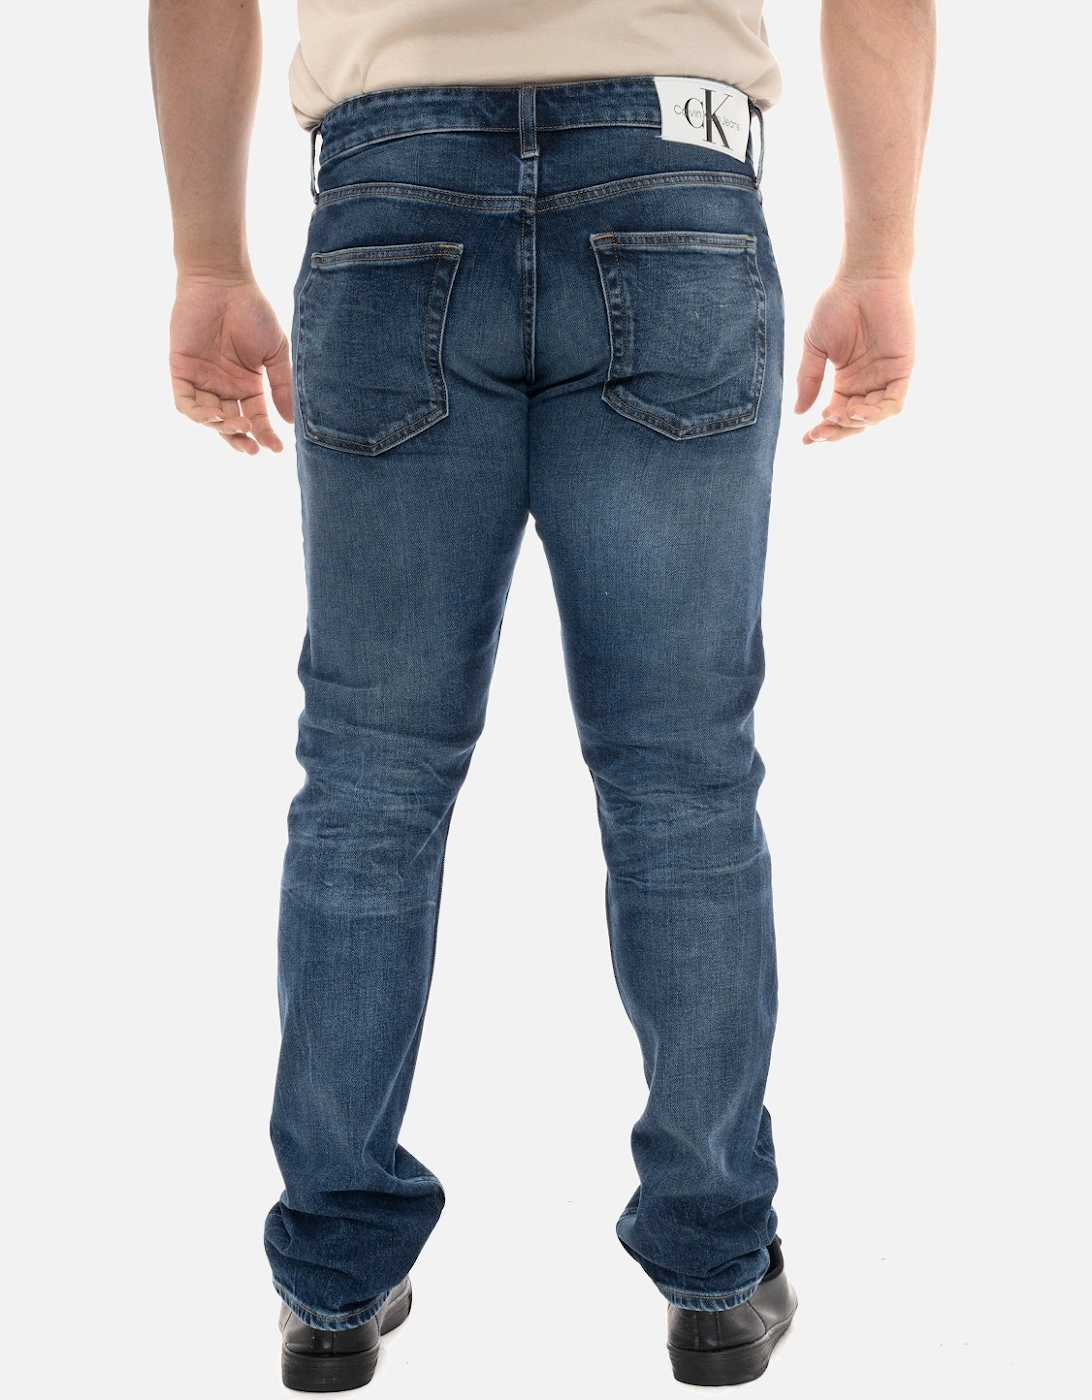 Mens Slim Fit Jeans (Blue)